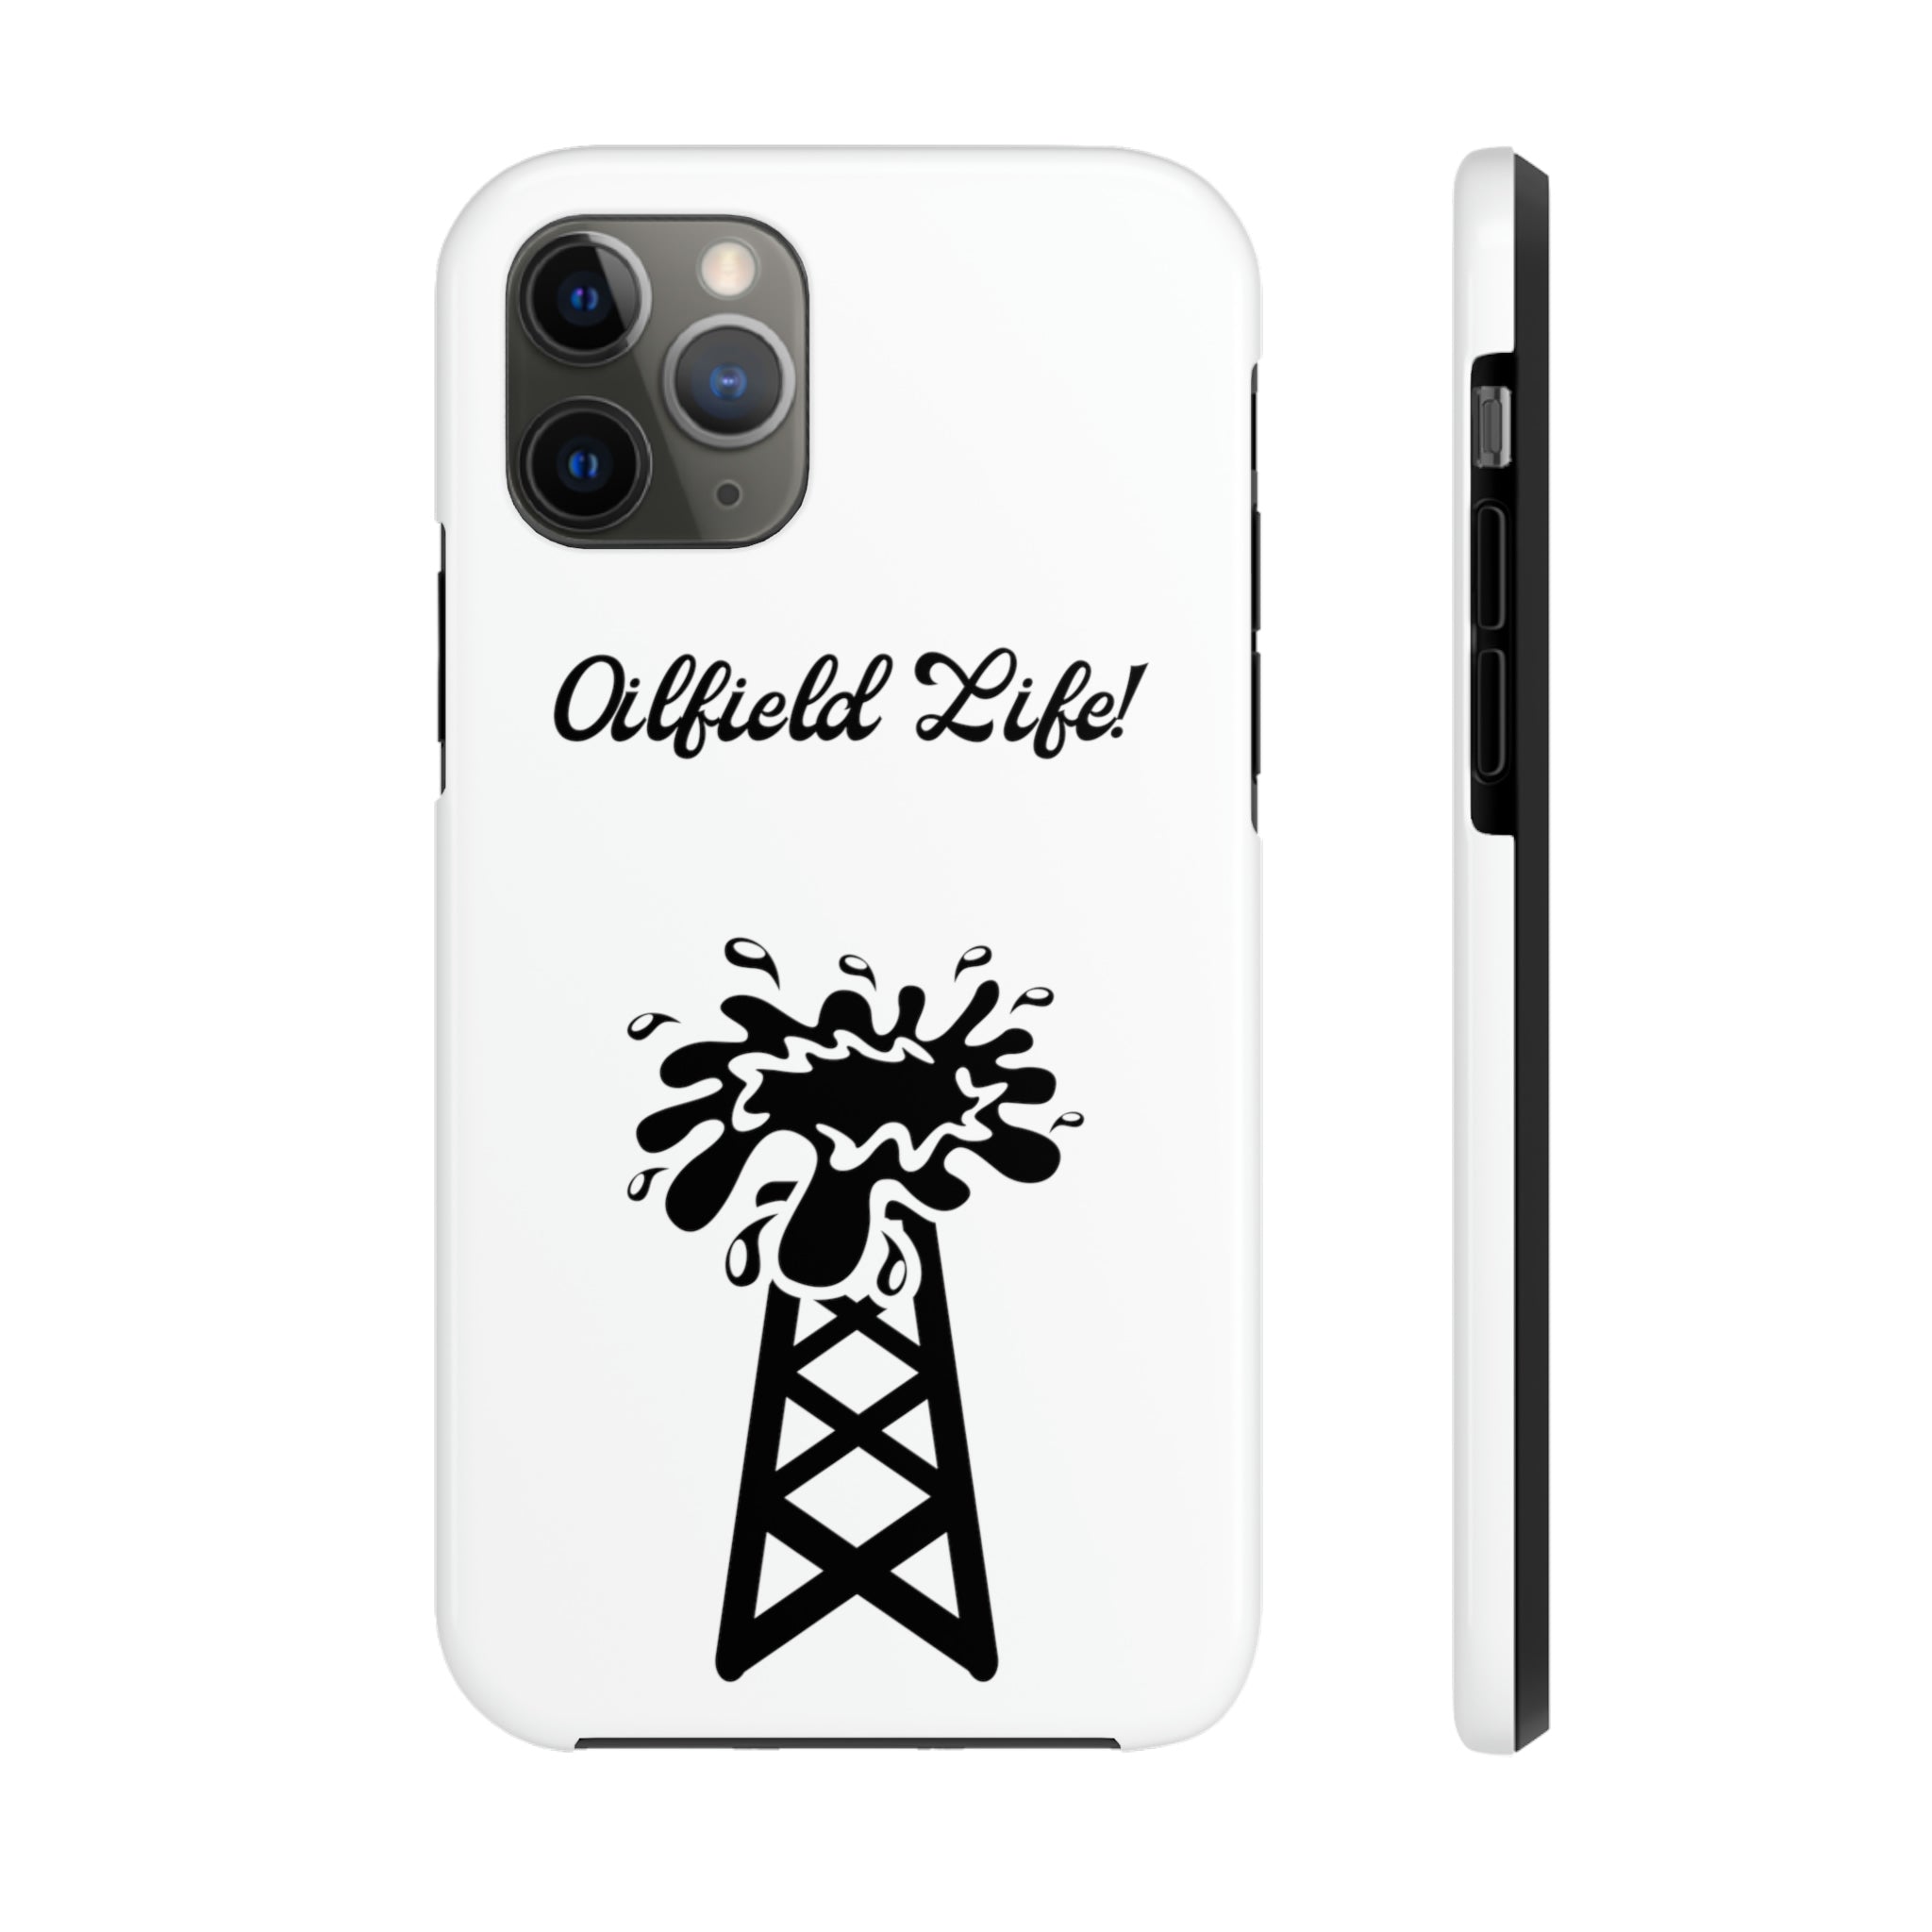 Oilfield Life Phone Case